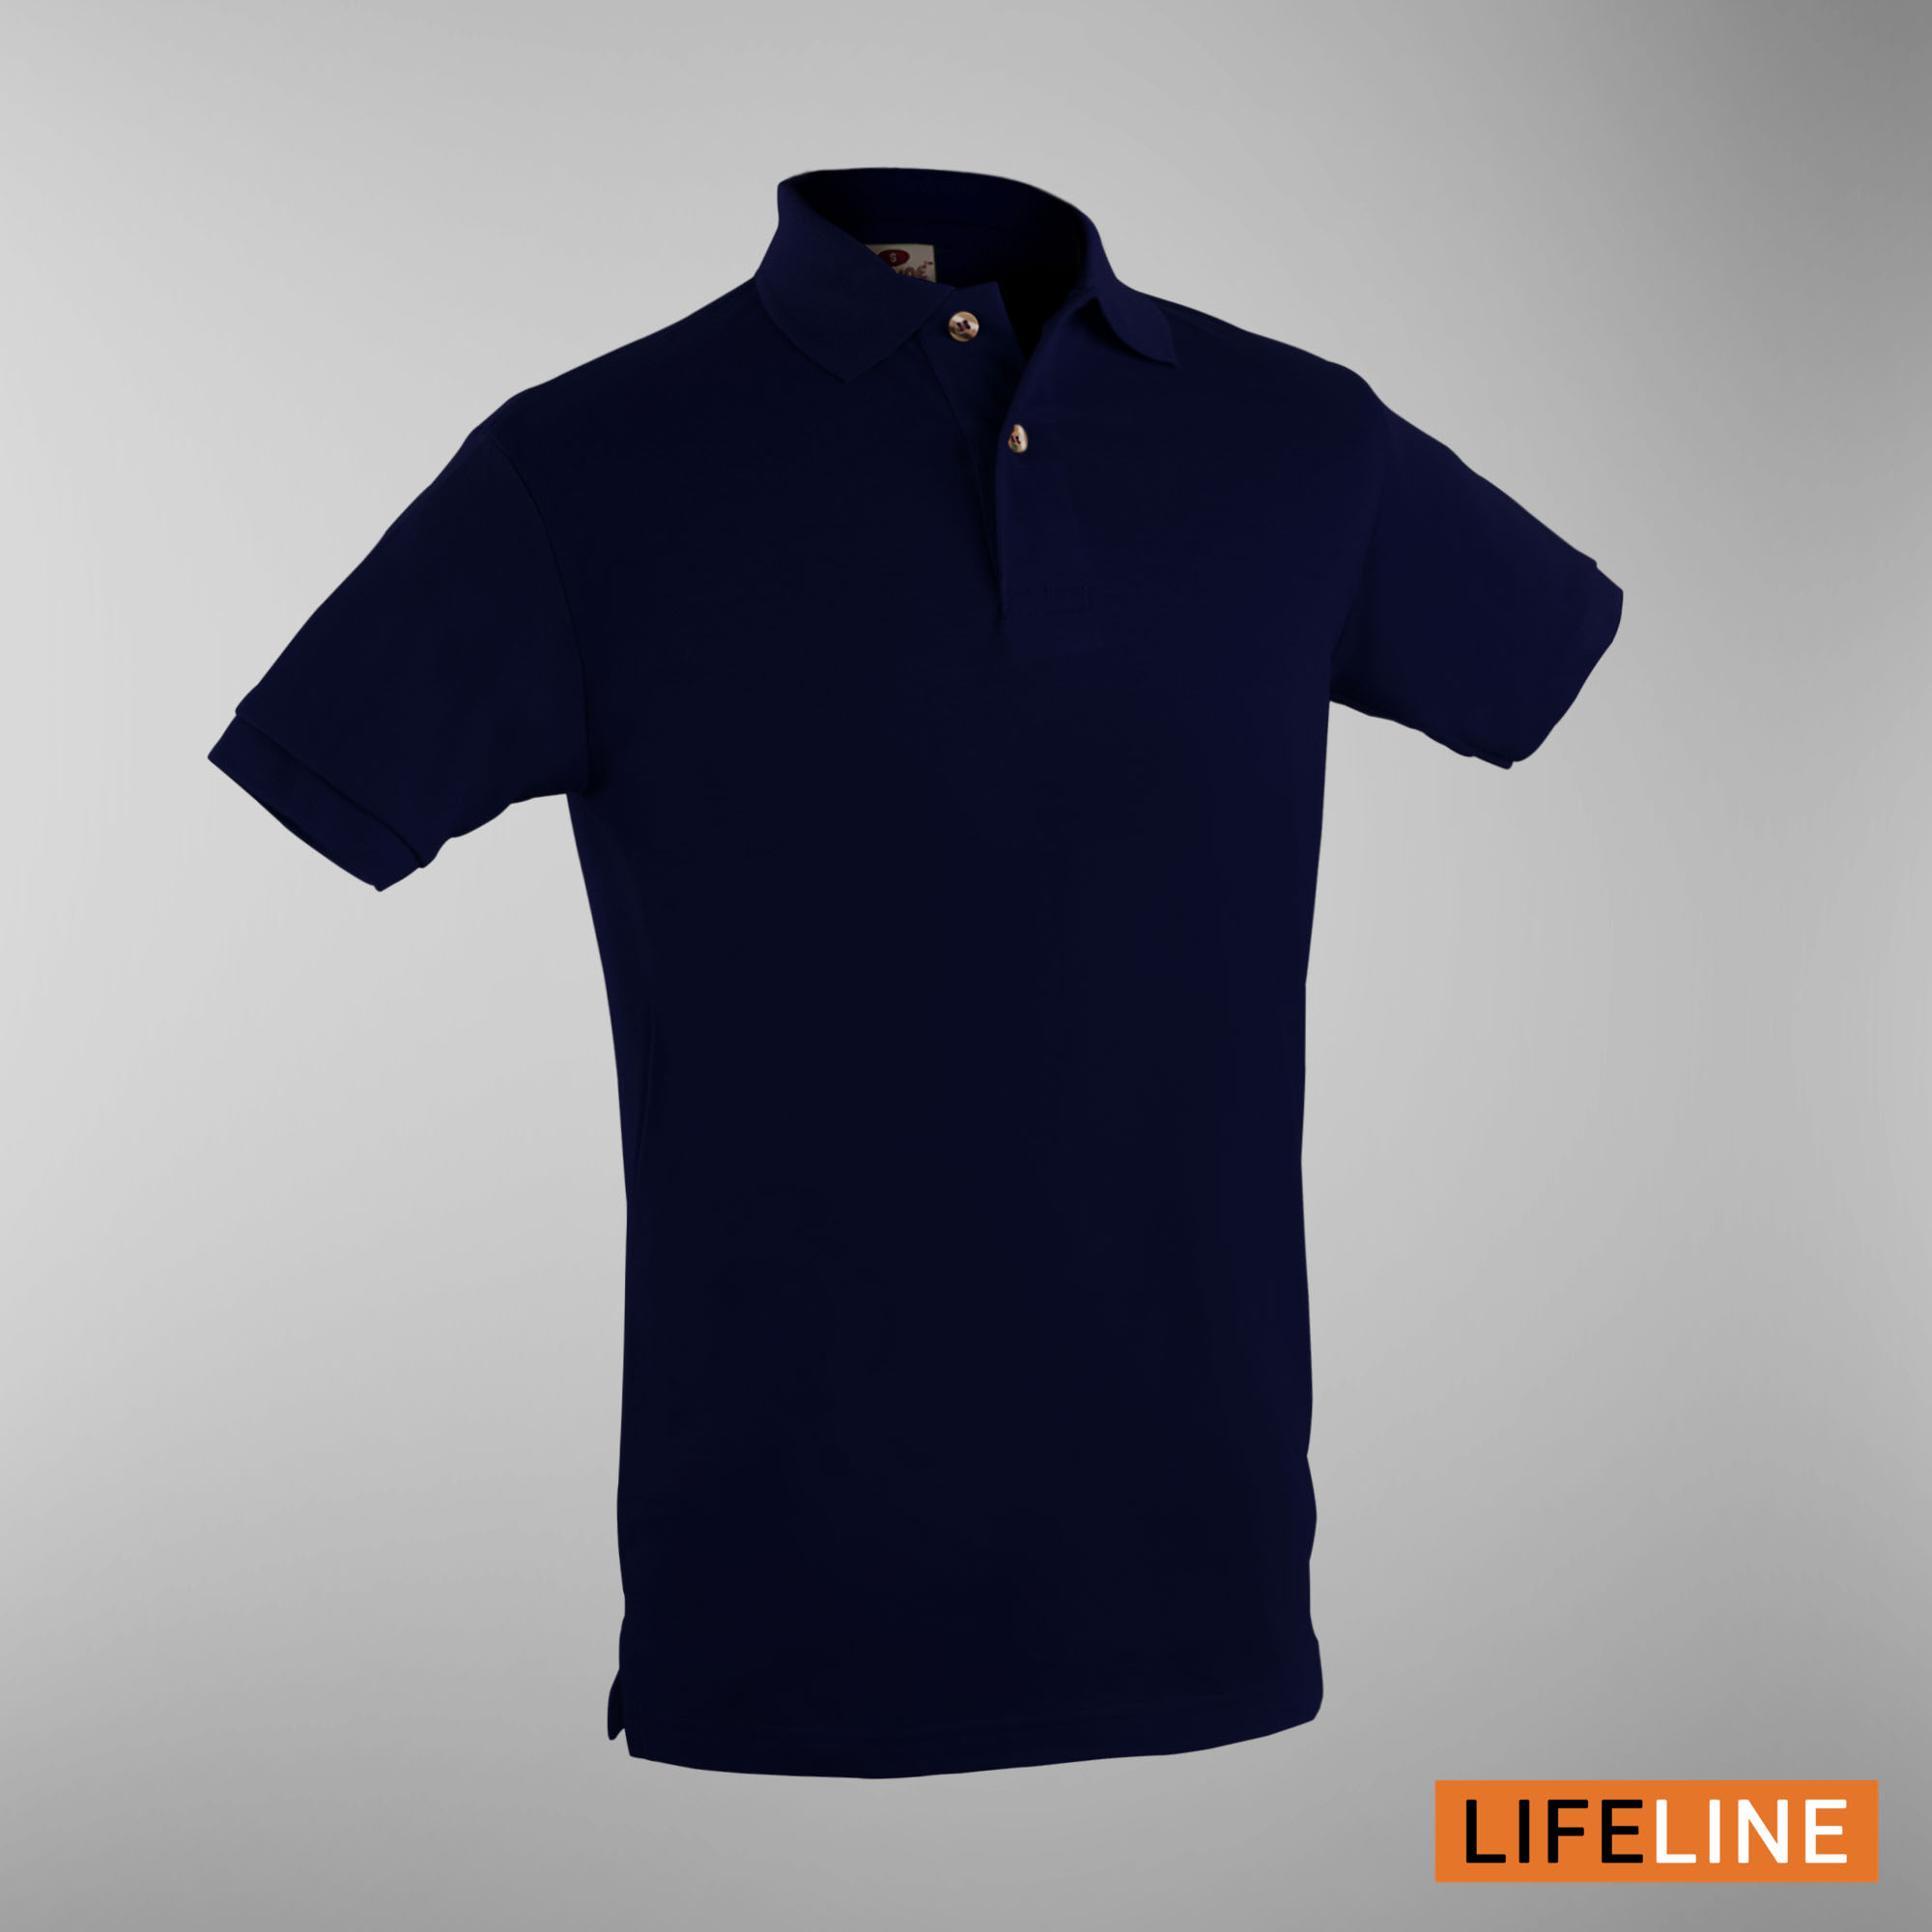 Lifeline Men’s Poloshirt (Navy Blue)